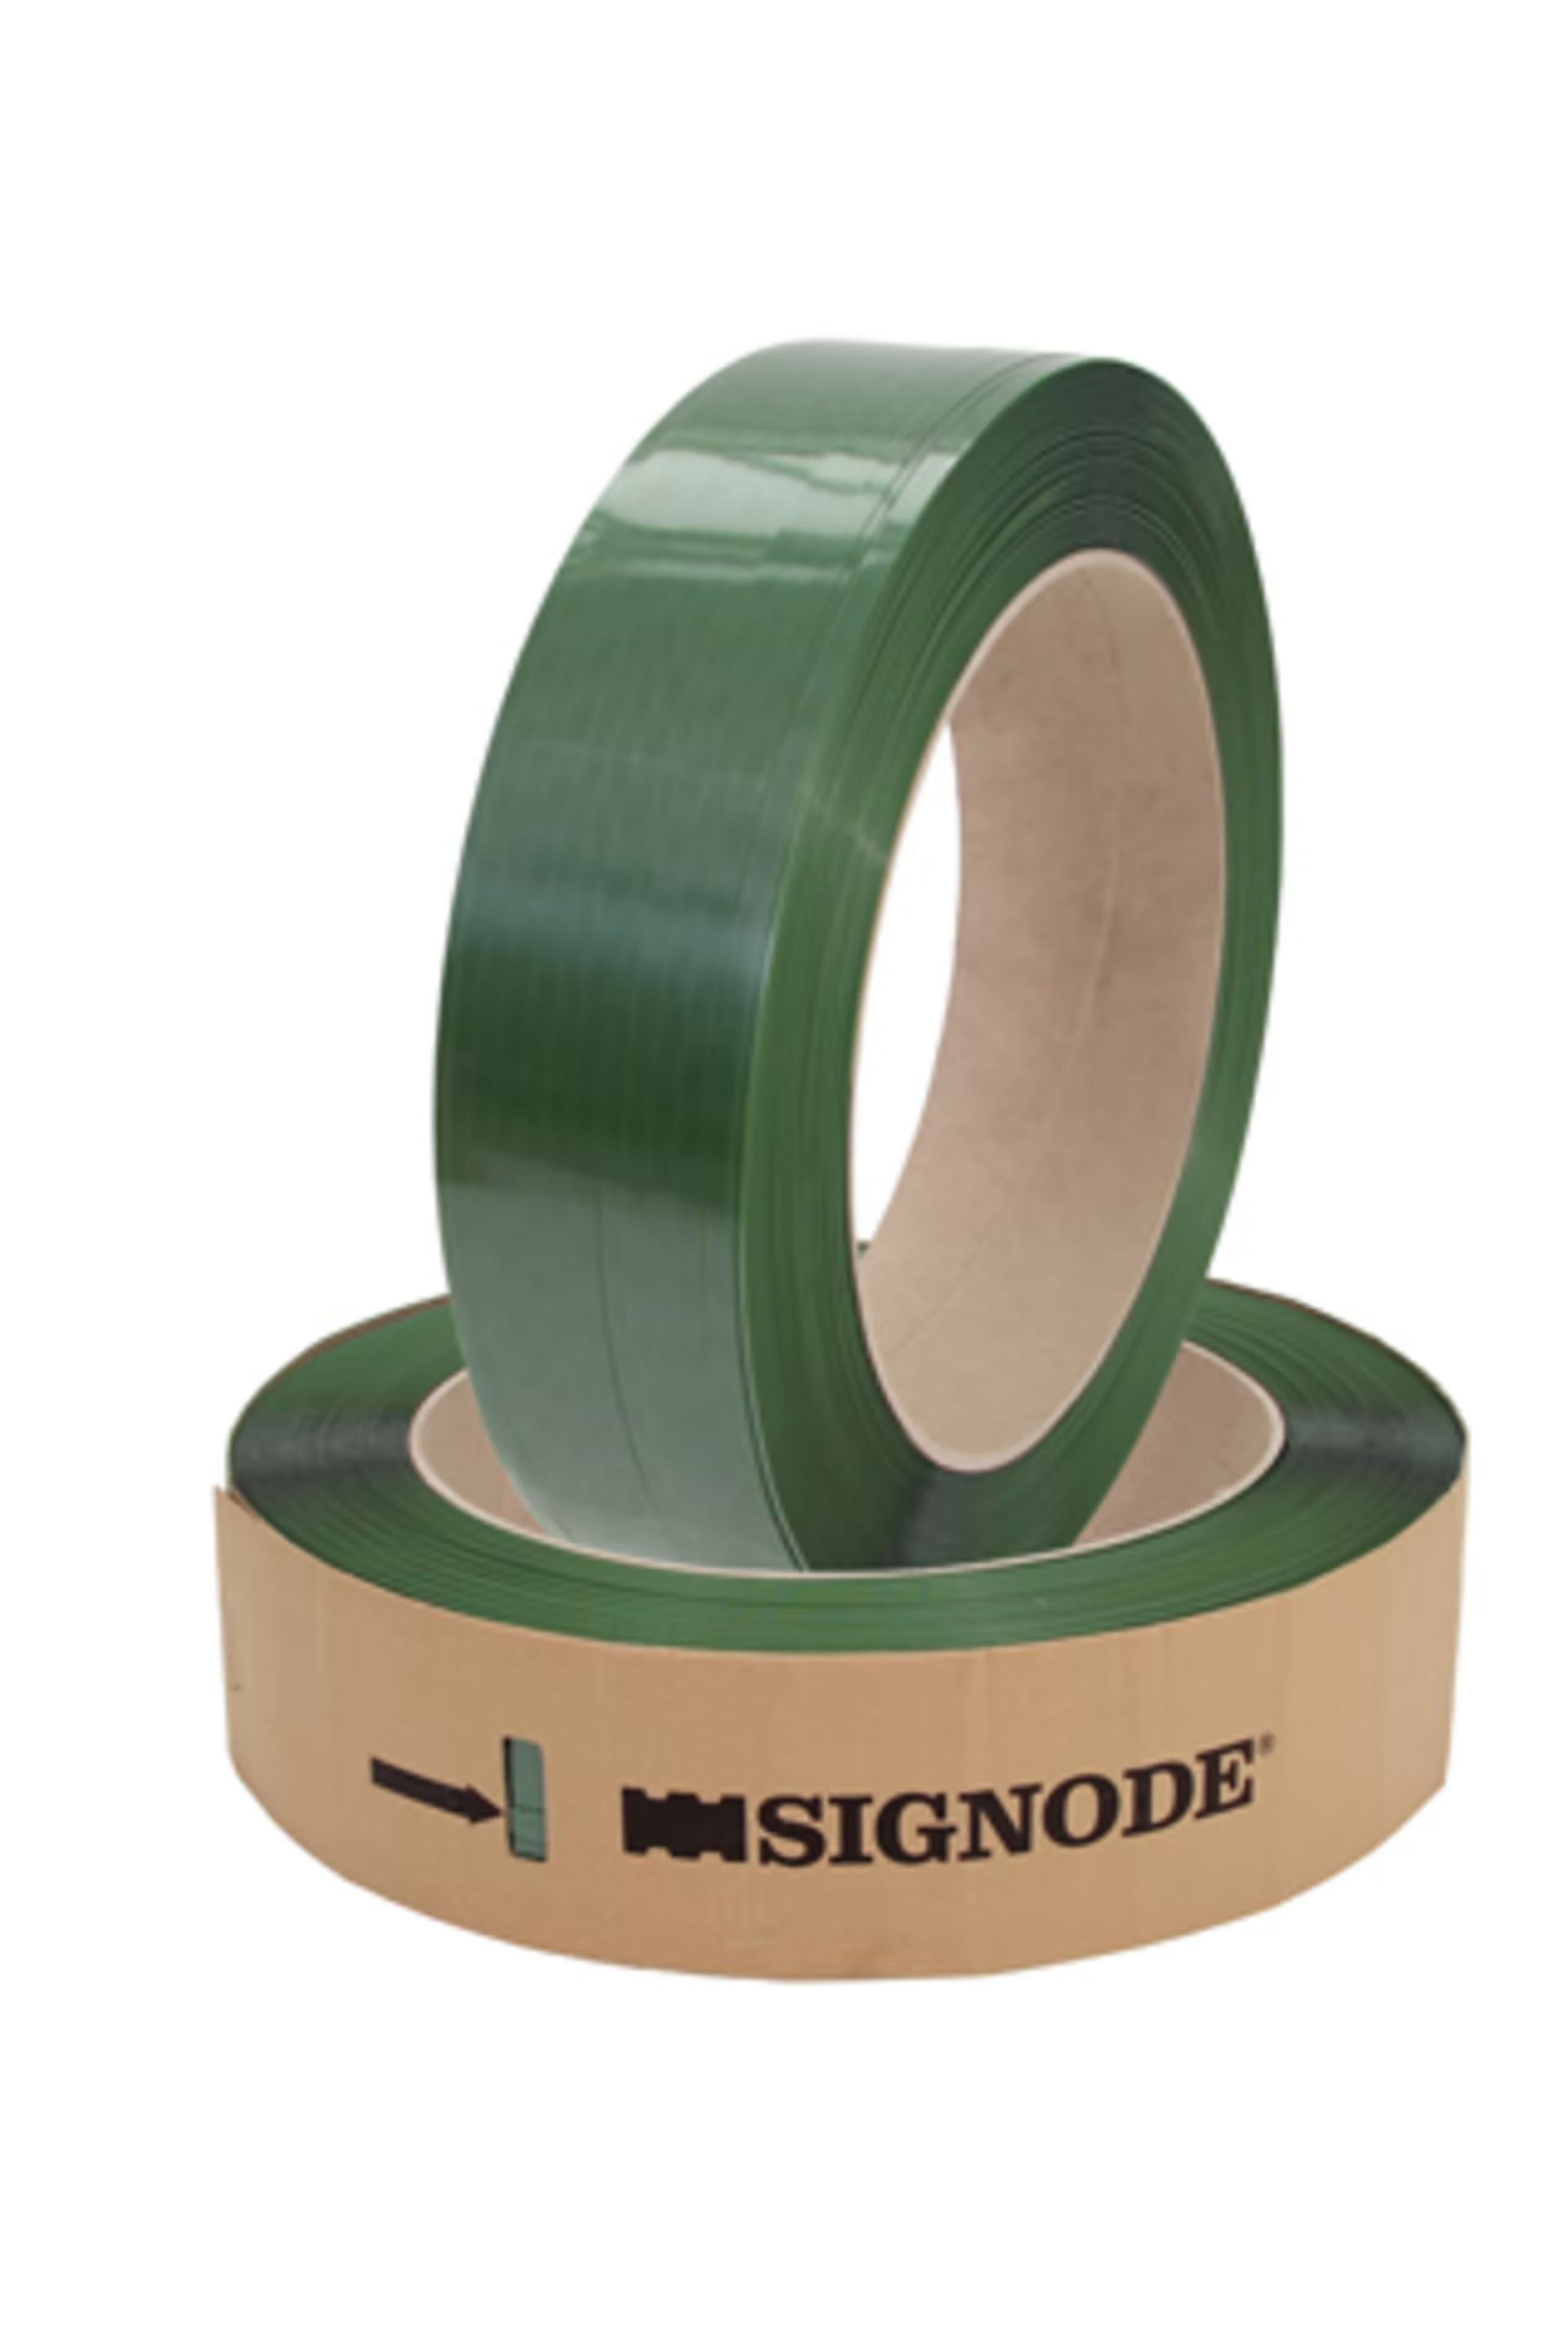 SIGNODE-Dylastic-Band, 12,7x0,56mmx2438lfm, 816 B, schwarz, Kerndurchm. 406mm